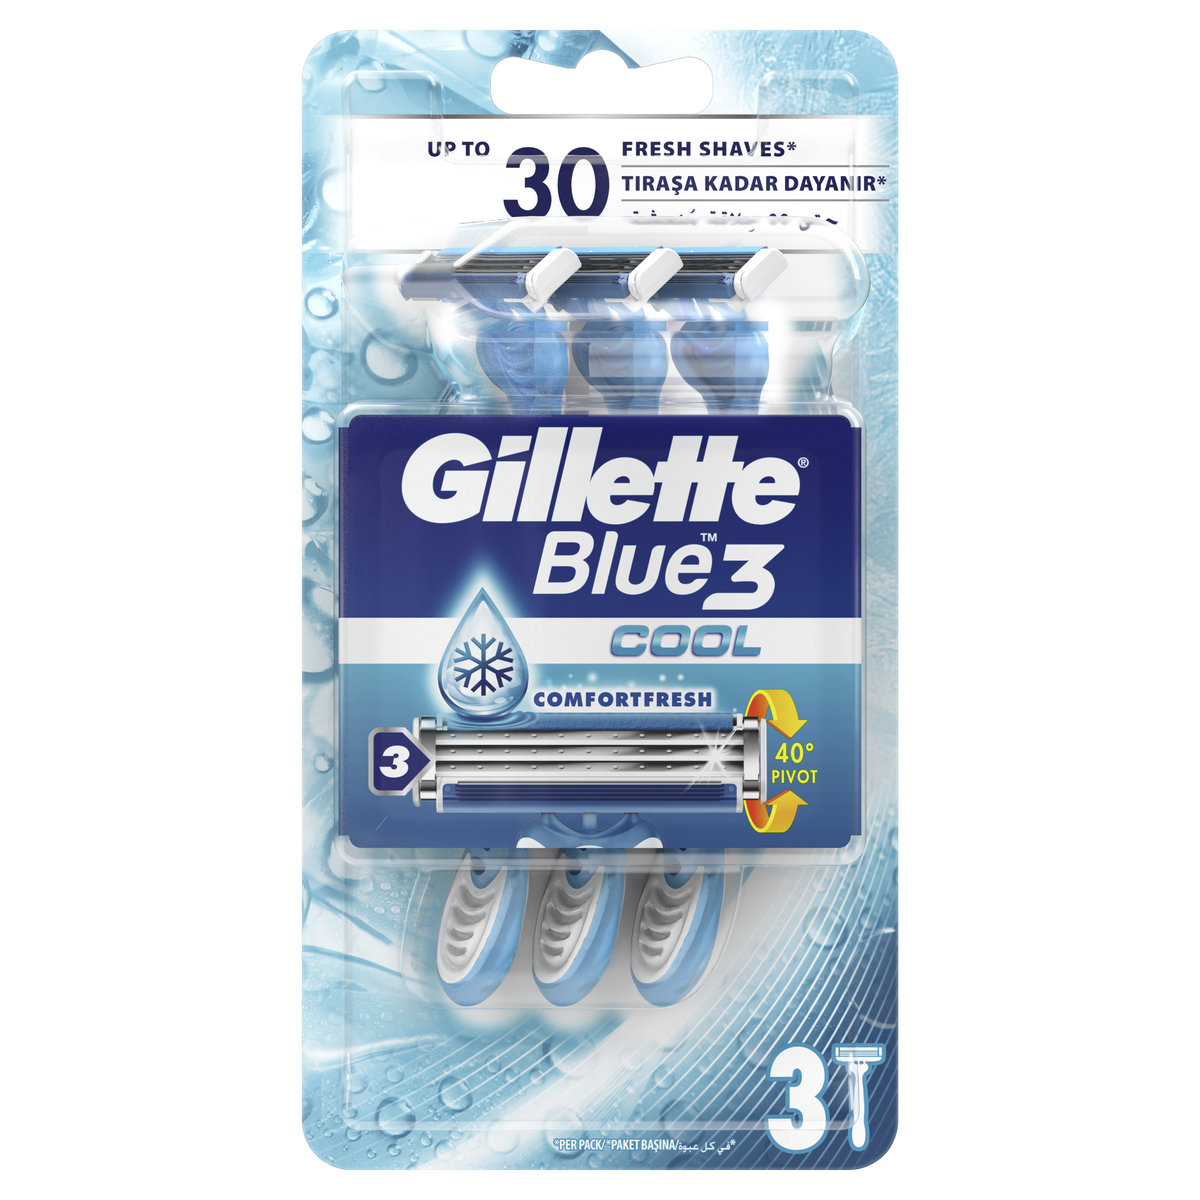 Gillette Blue3 Maszynka do golenia Cool 3 szt.